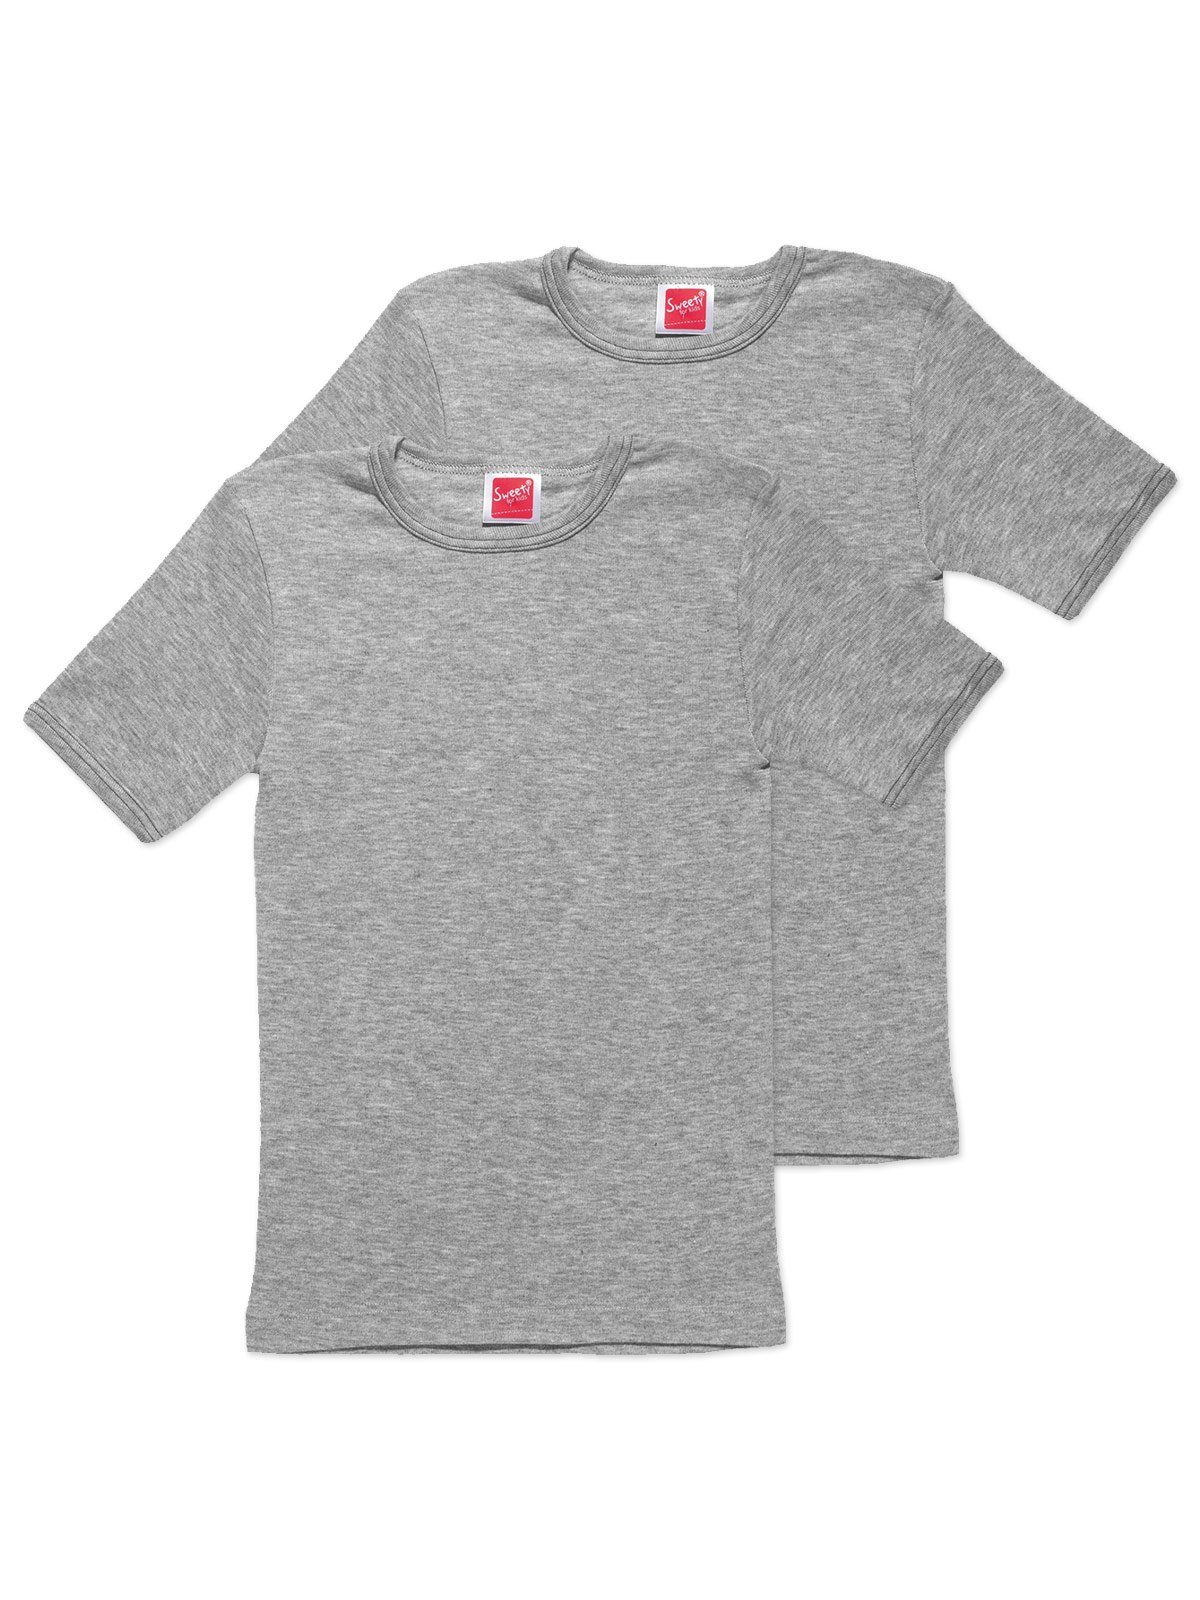 hohe Kids for Shirt Markenqualität (Spar-Set, Sweety 2er Achselhemd Sparpack Funktionswäsche Kinder 2-St)